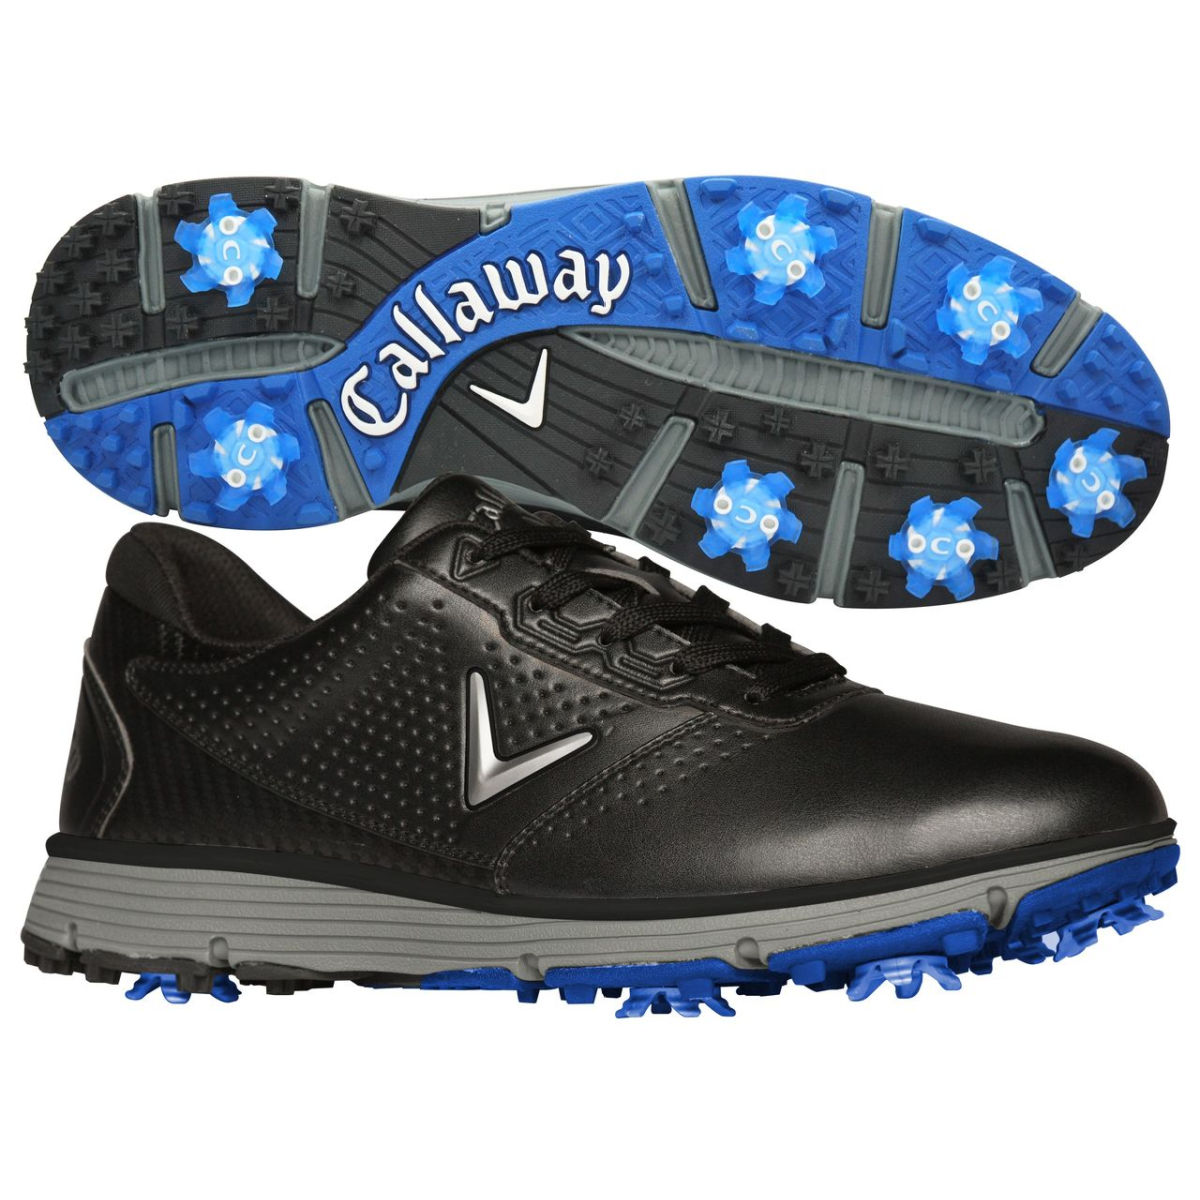 Callaway Golf Balboa TRX Shoes